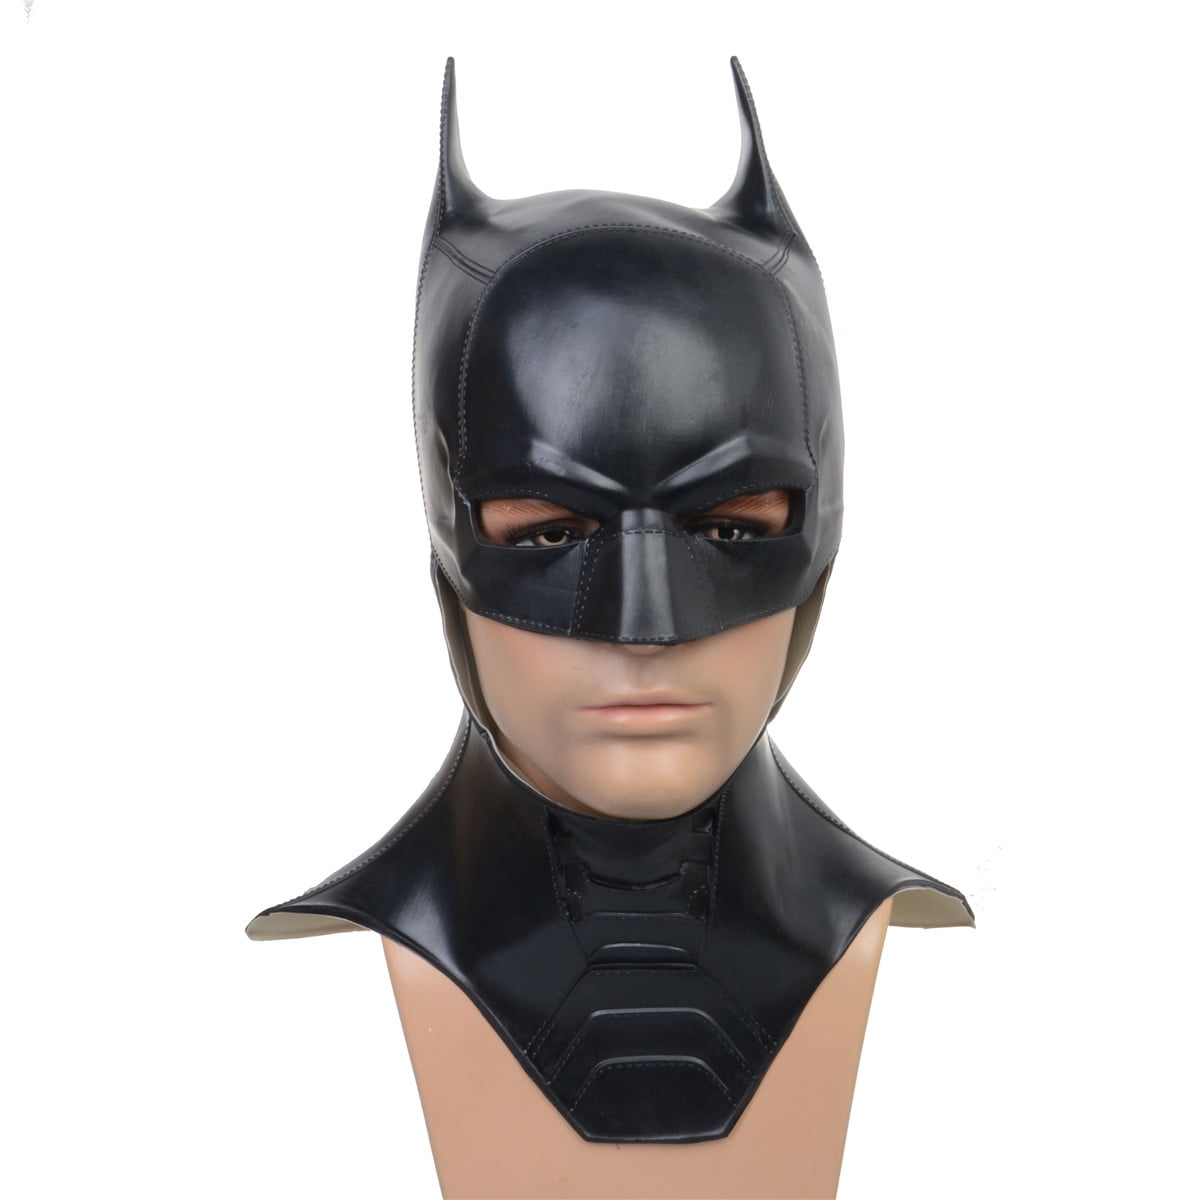 Latex Batman Full Mask With Cowl Adult Cosplay The Dark Knight Rises Batman Mask 